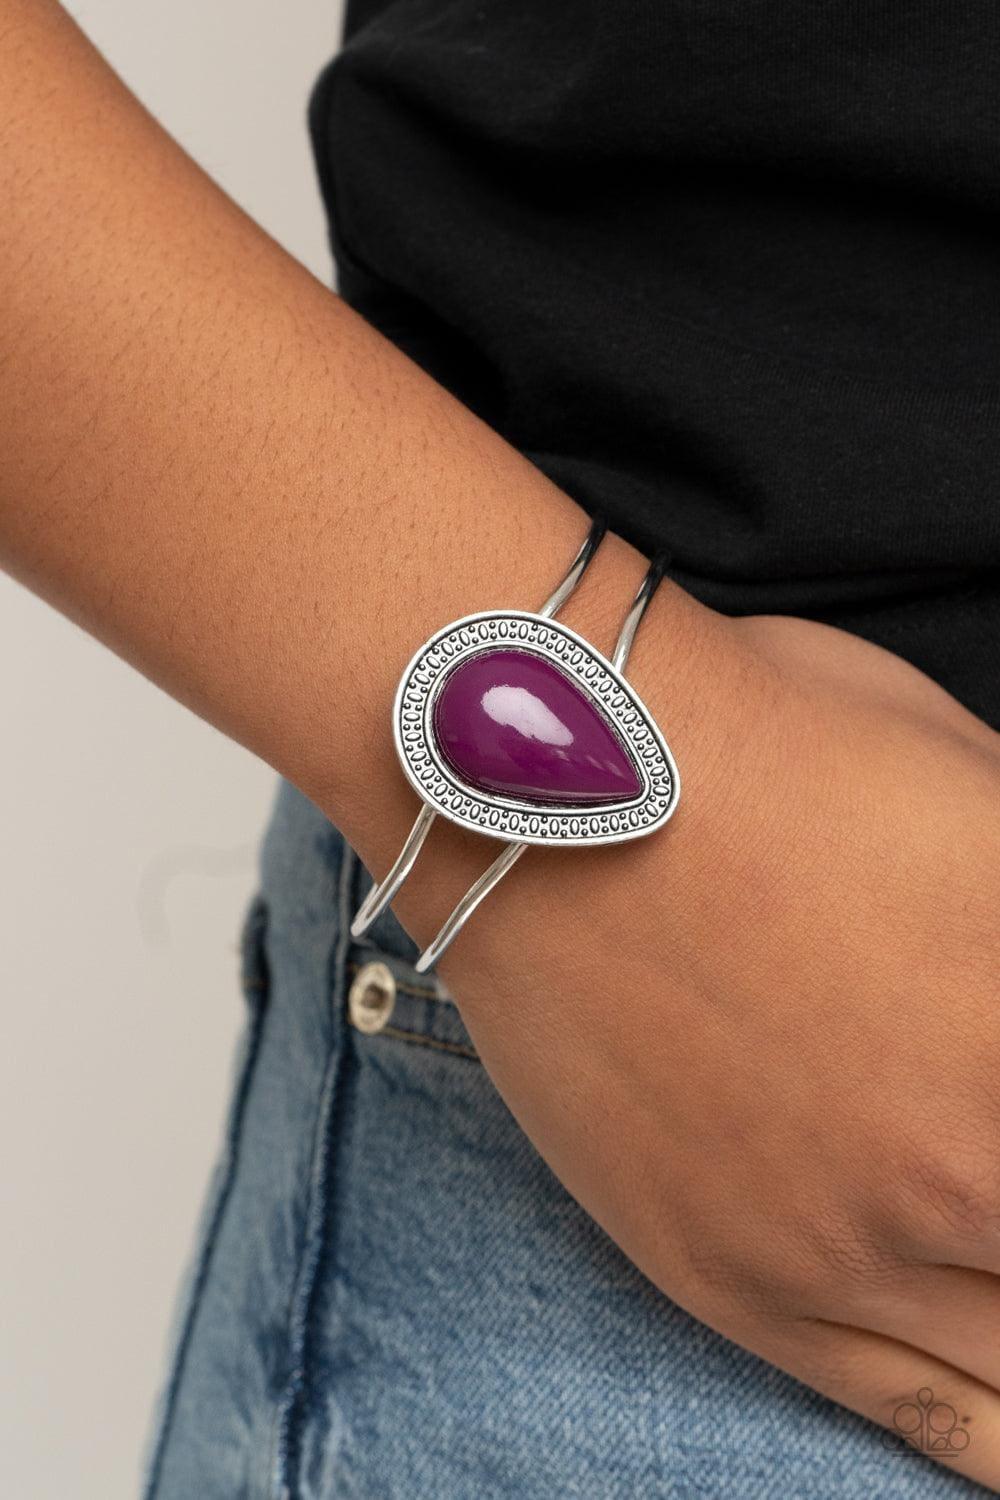 Paparazzi Accessories - Over The Top Pop - Purple Bracelet - Bling by JessieK